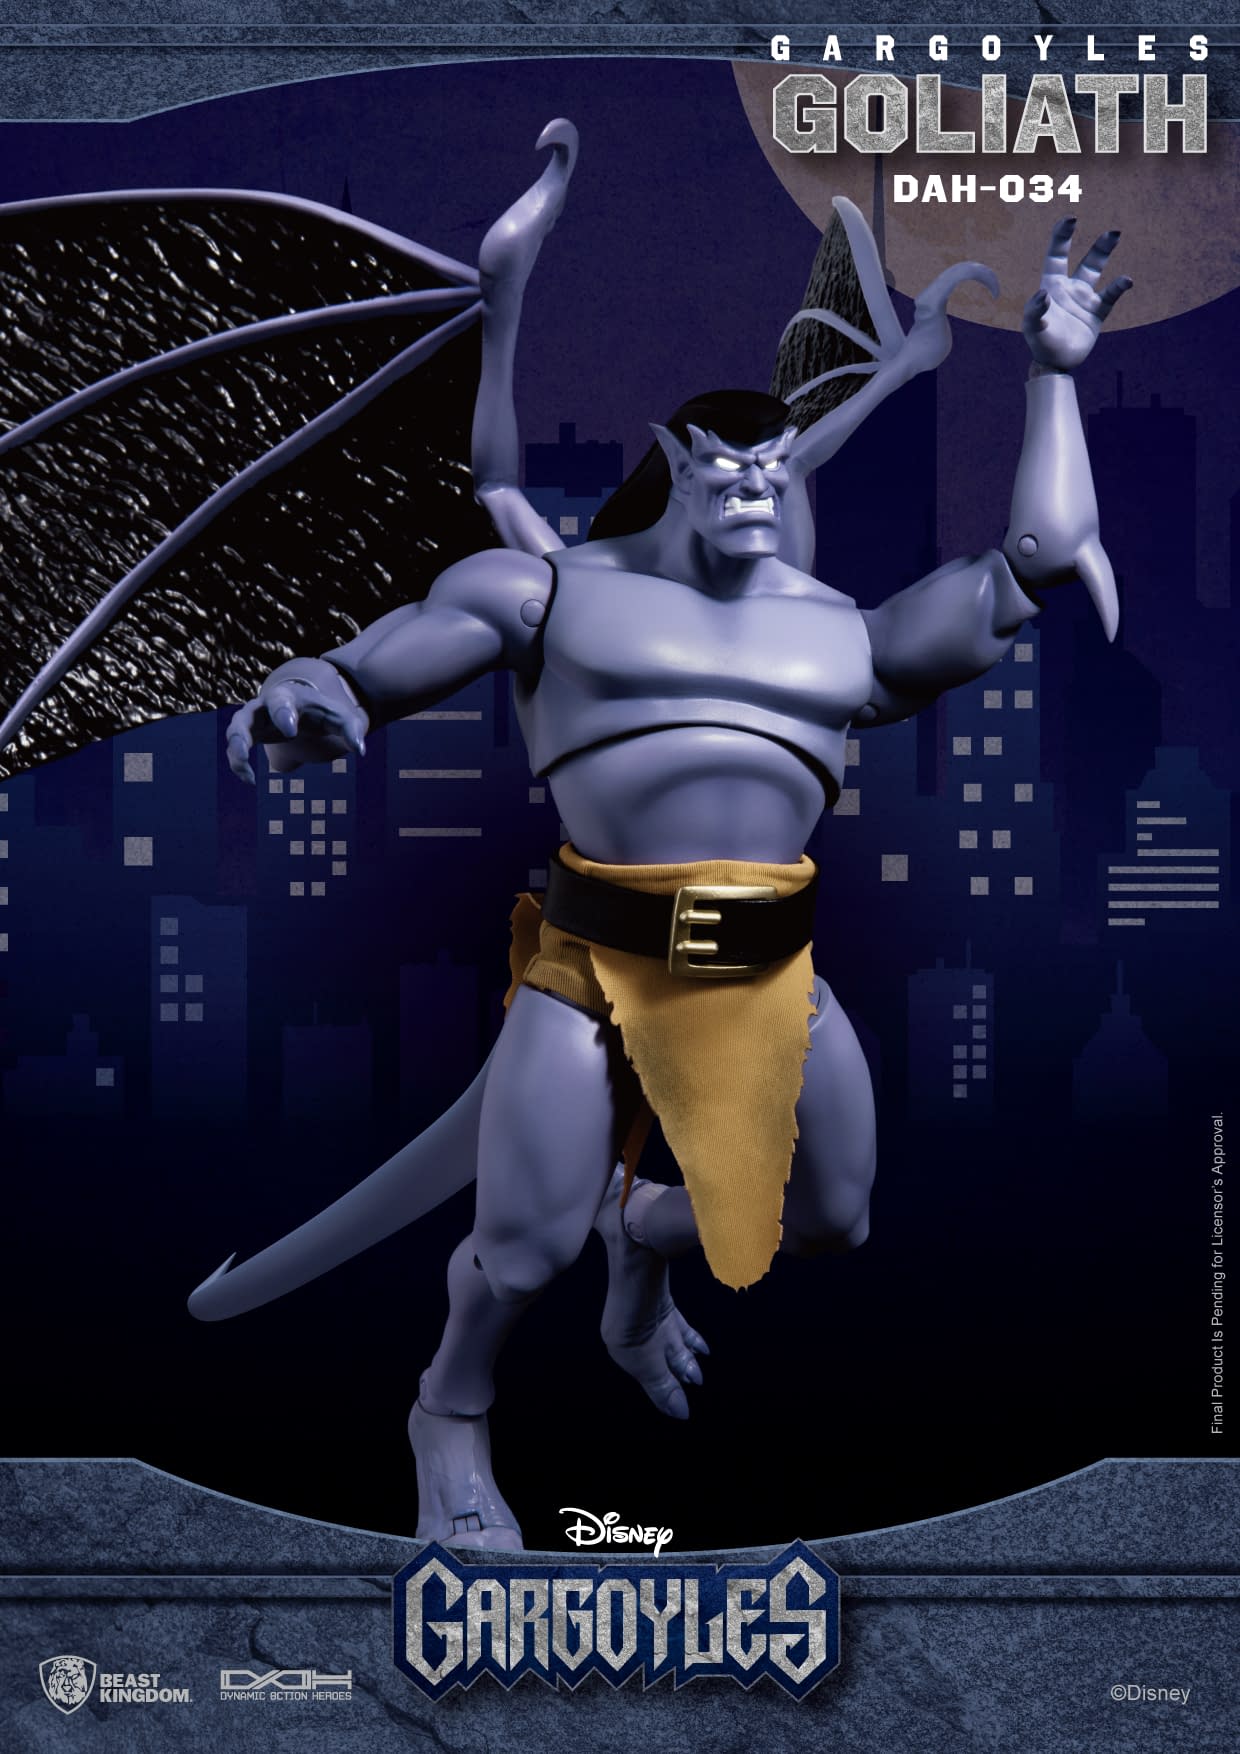 Disney's Gargoyles Comes to Beast Kingdom with DAH Goliath Release